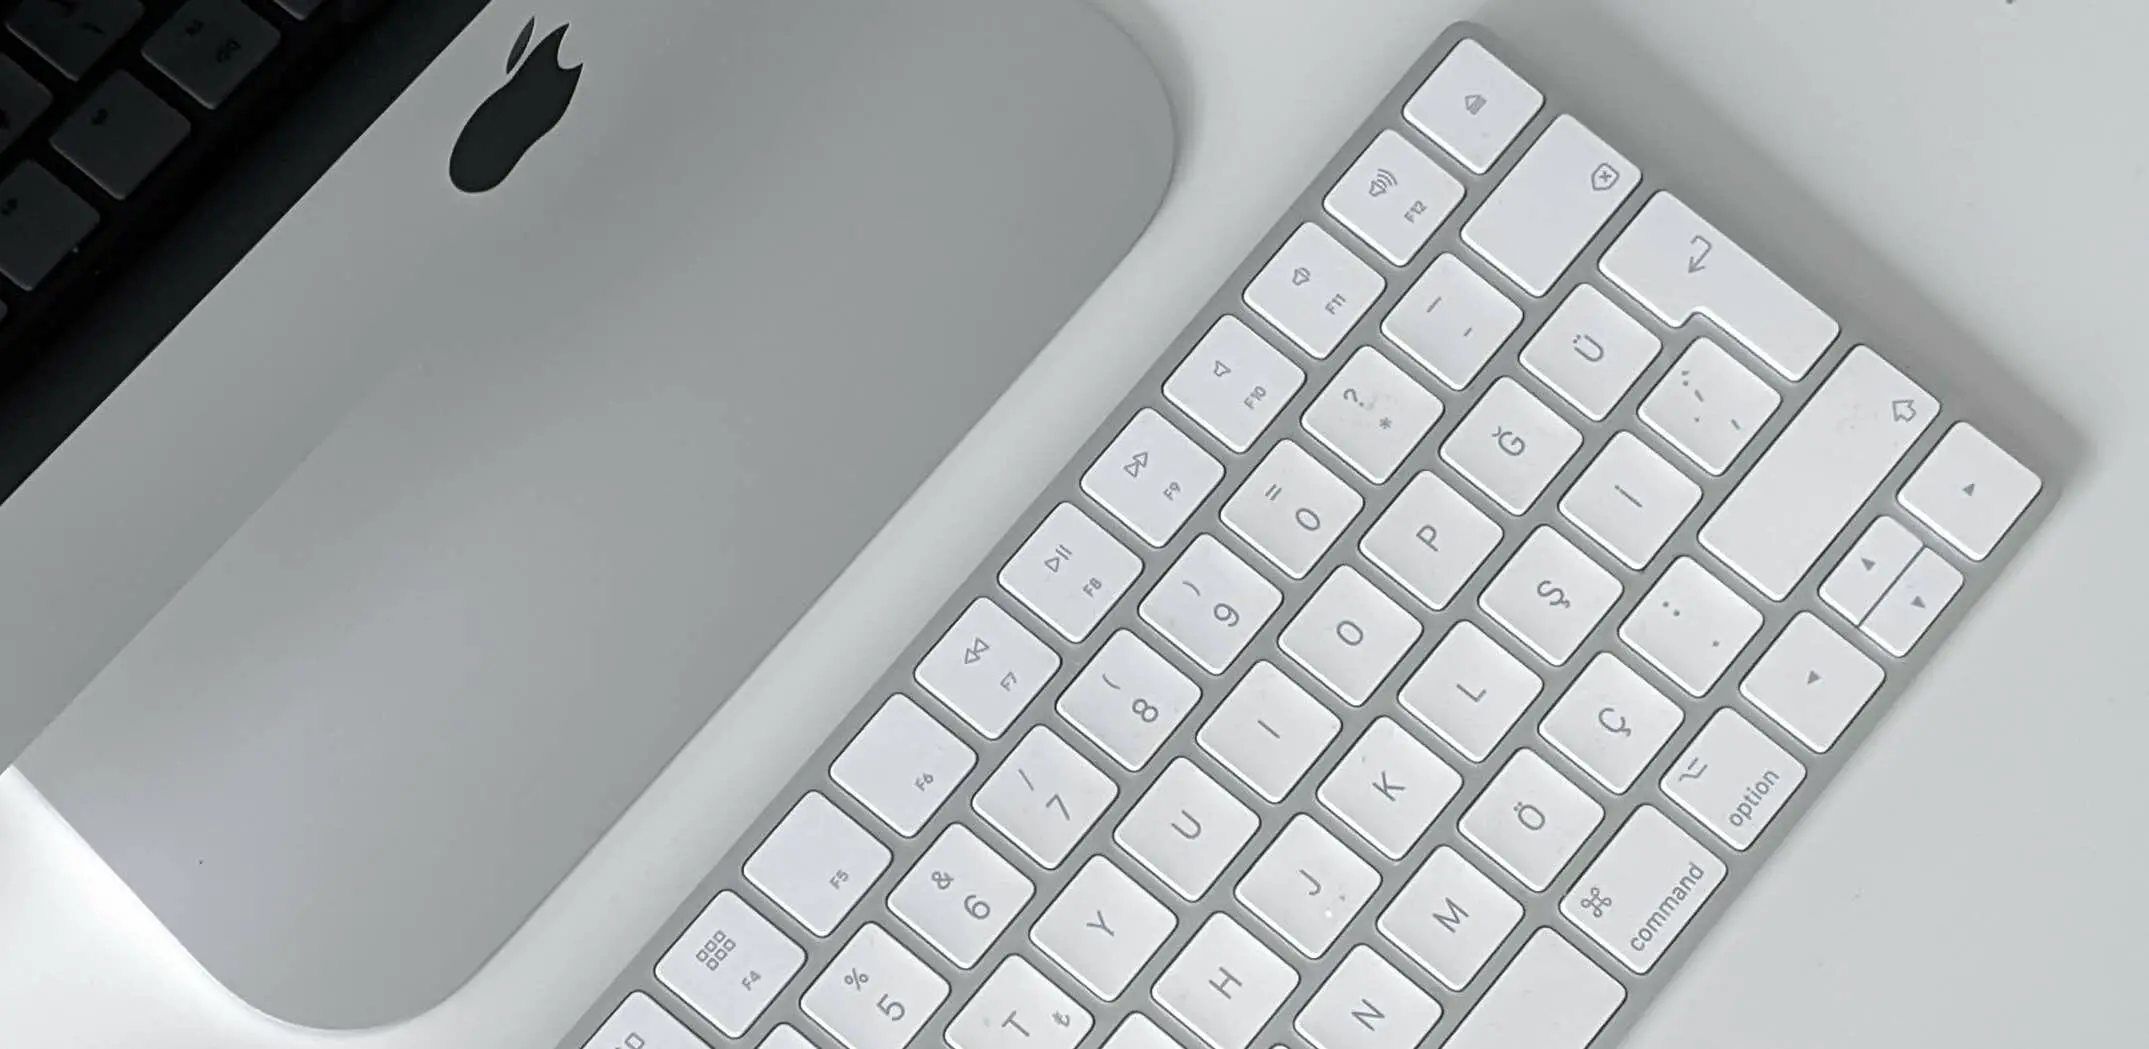 apple's MAC and wireless keyboard